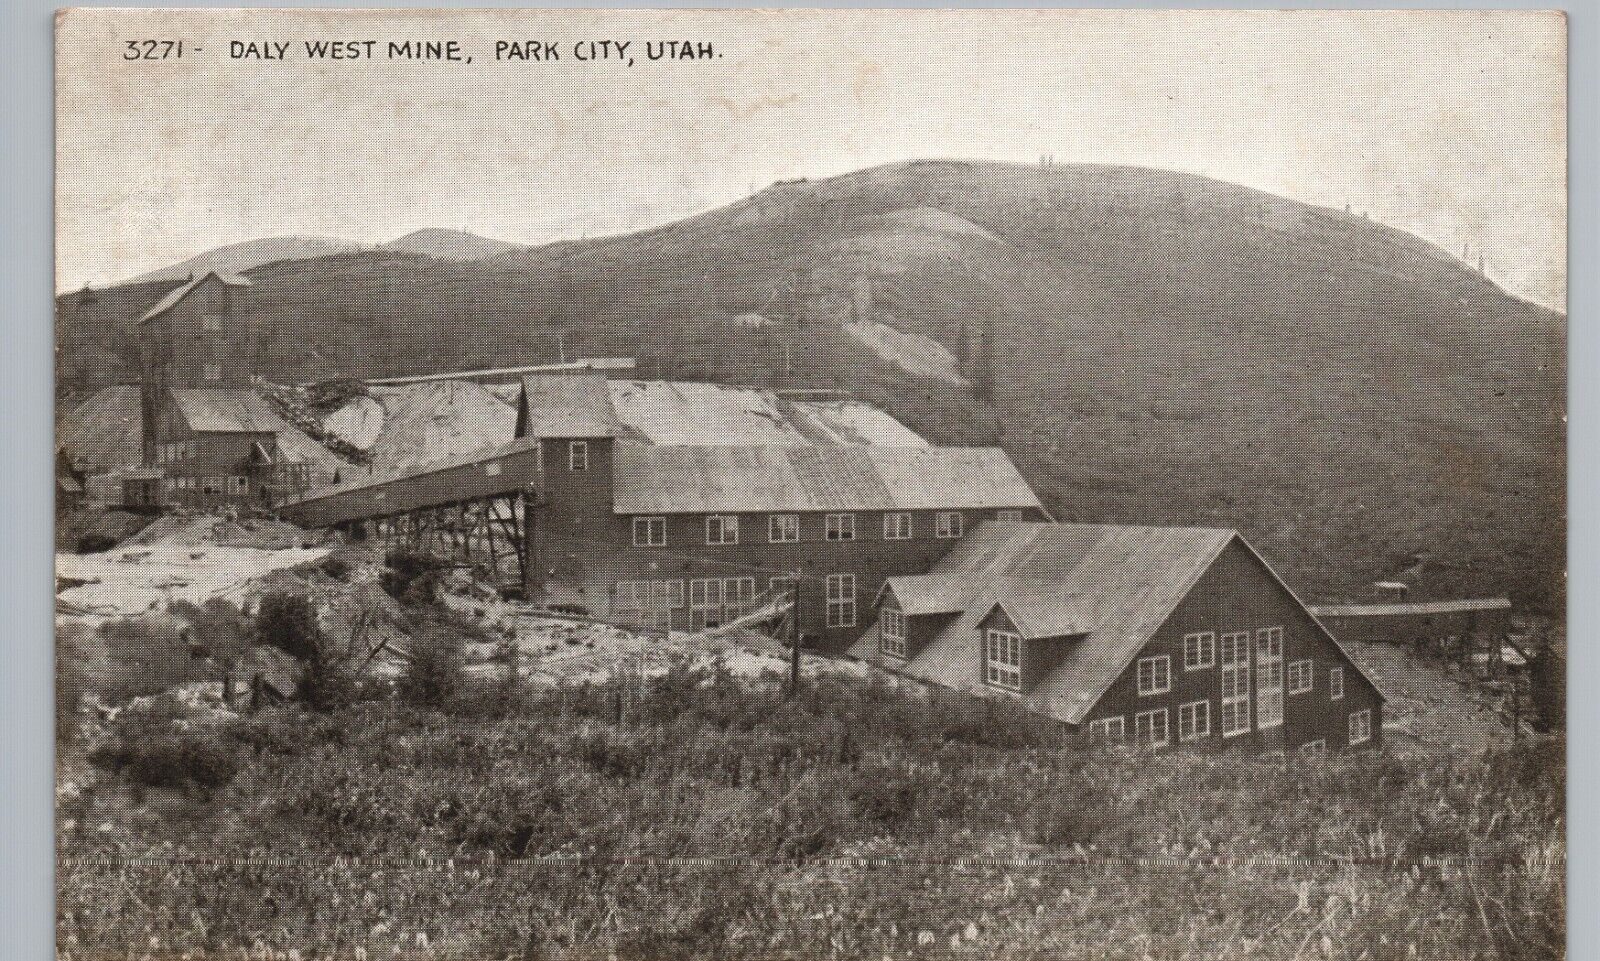 DALY WEST MINE c1910 park city ut original antique postcard utah mining history